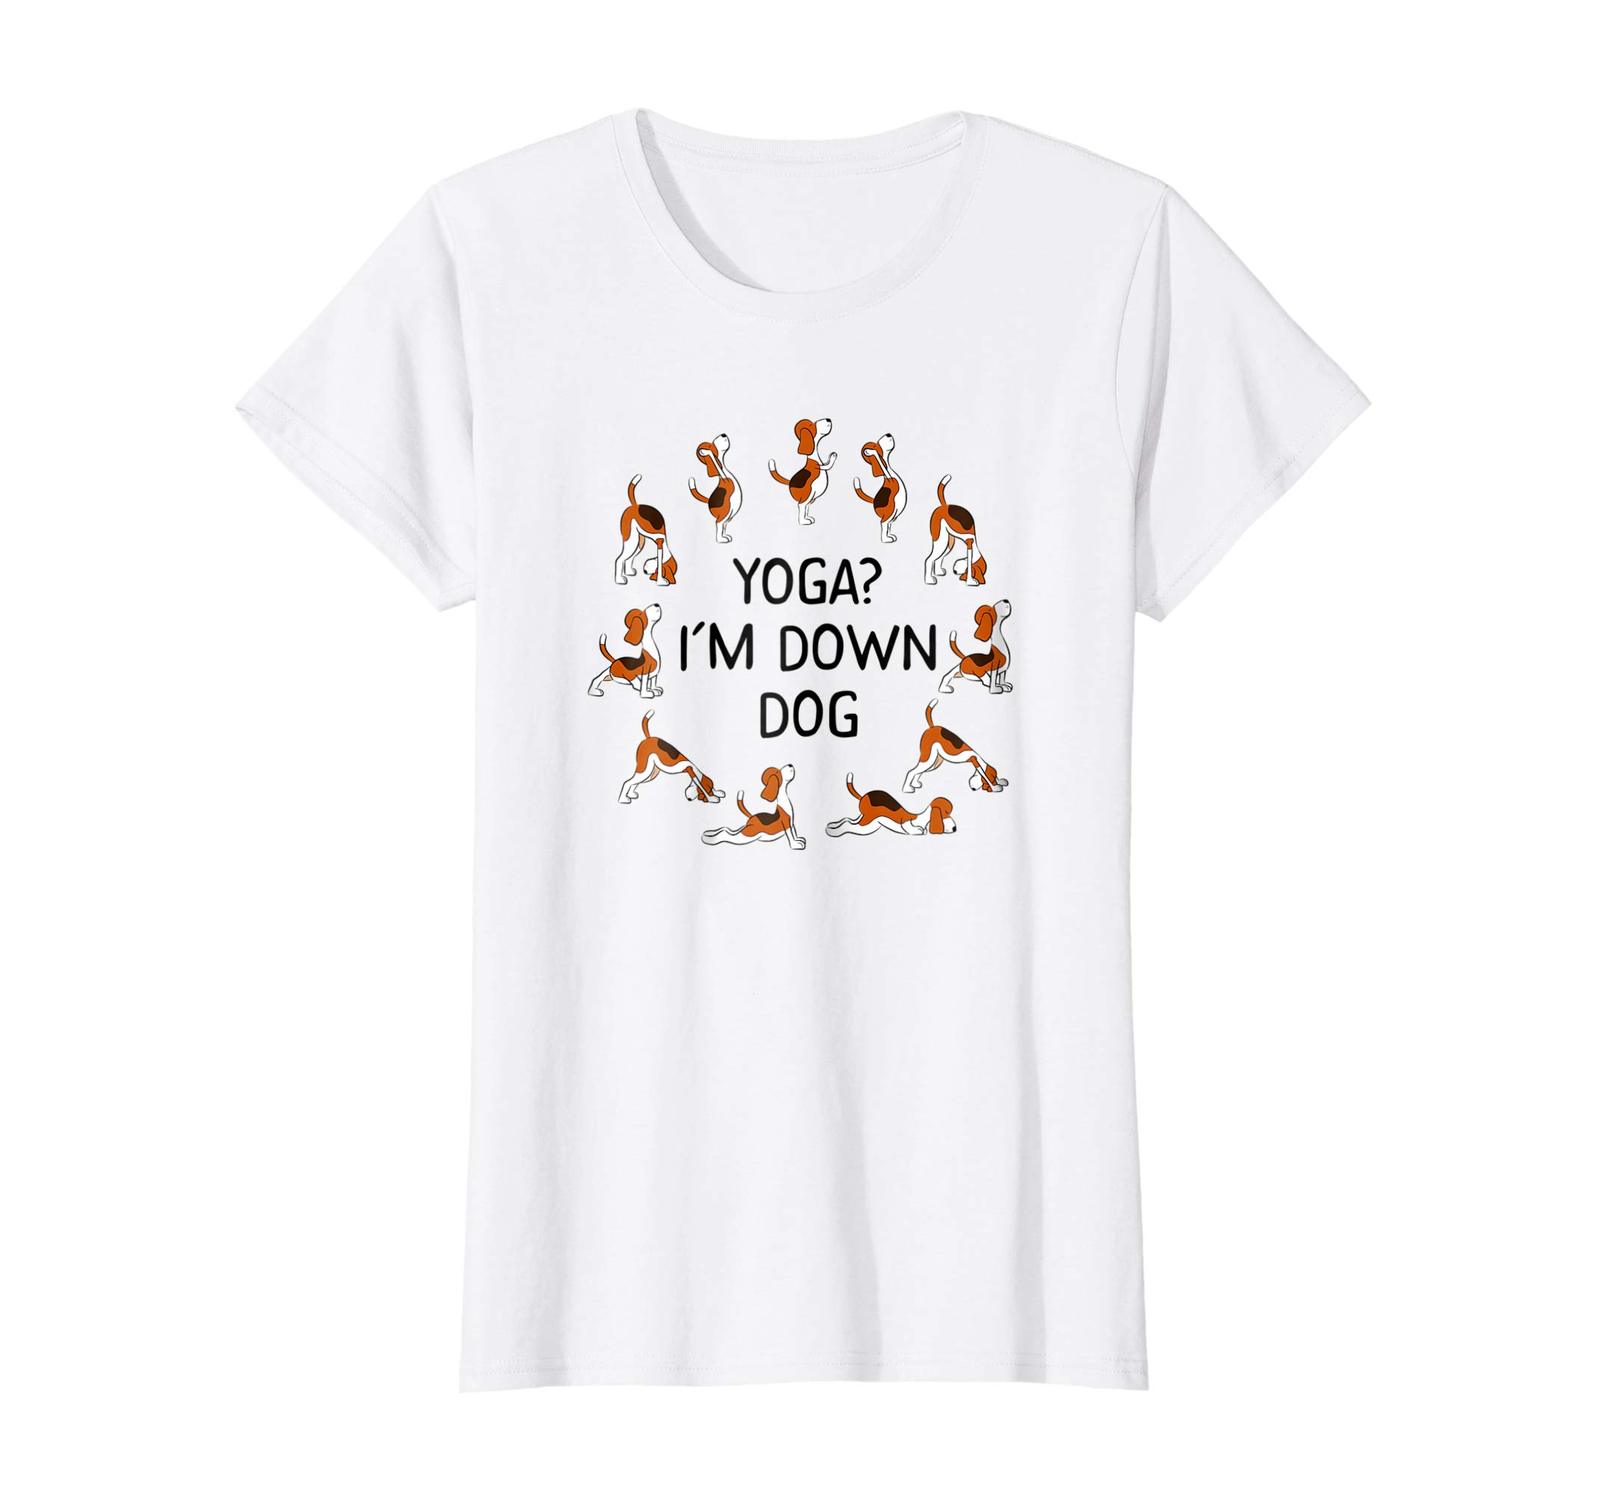 Dog Fashion - YOGA? I'M DOWN DOG Beagle Dog Yoga Pose Yogi Meme T-Shirt Wowen